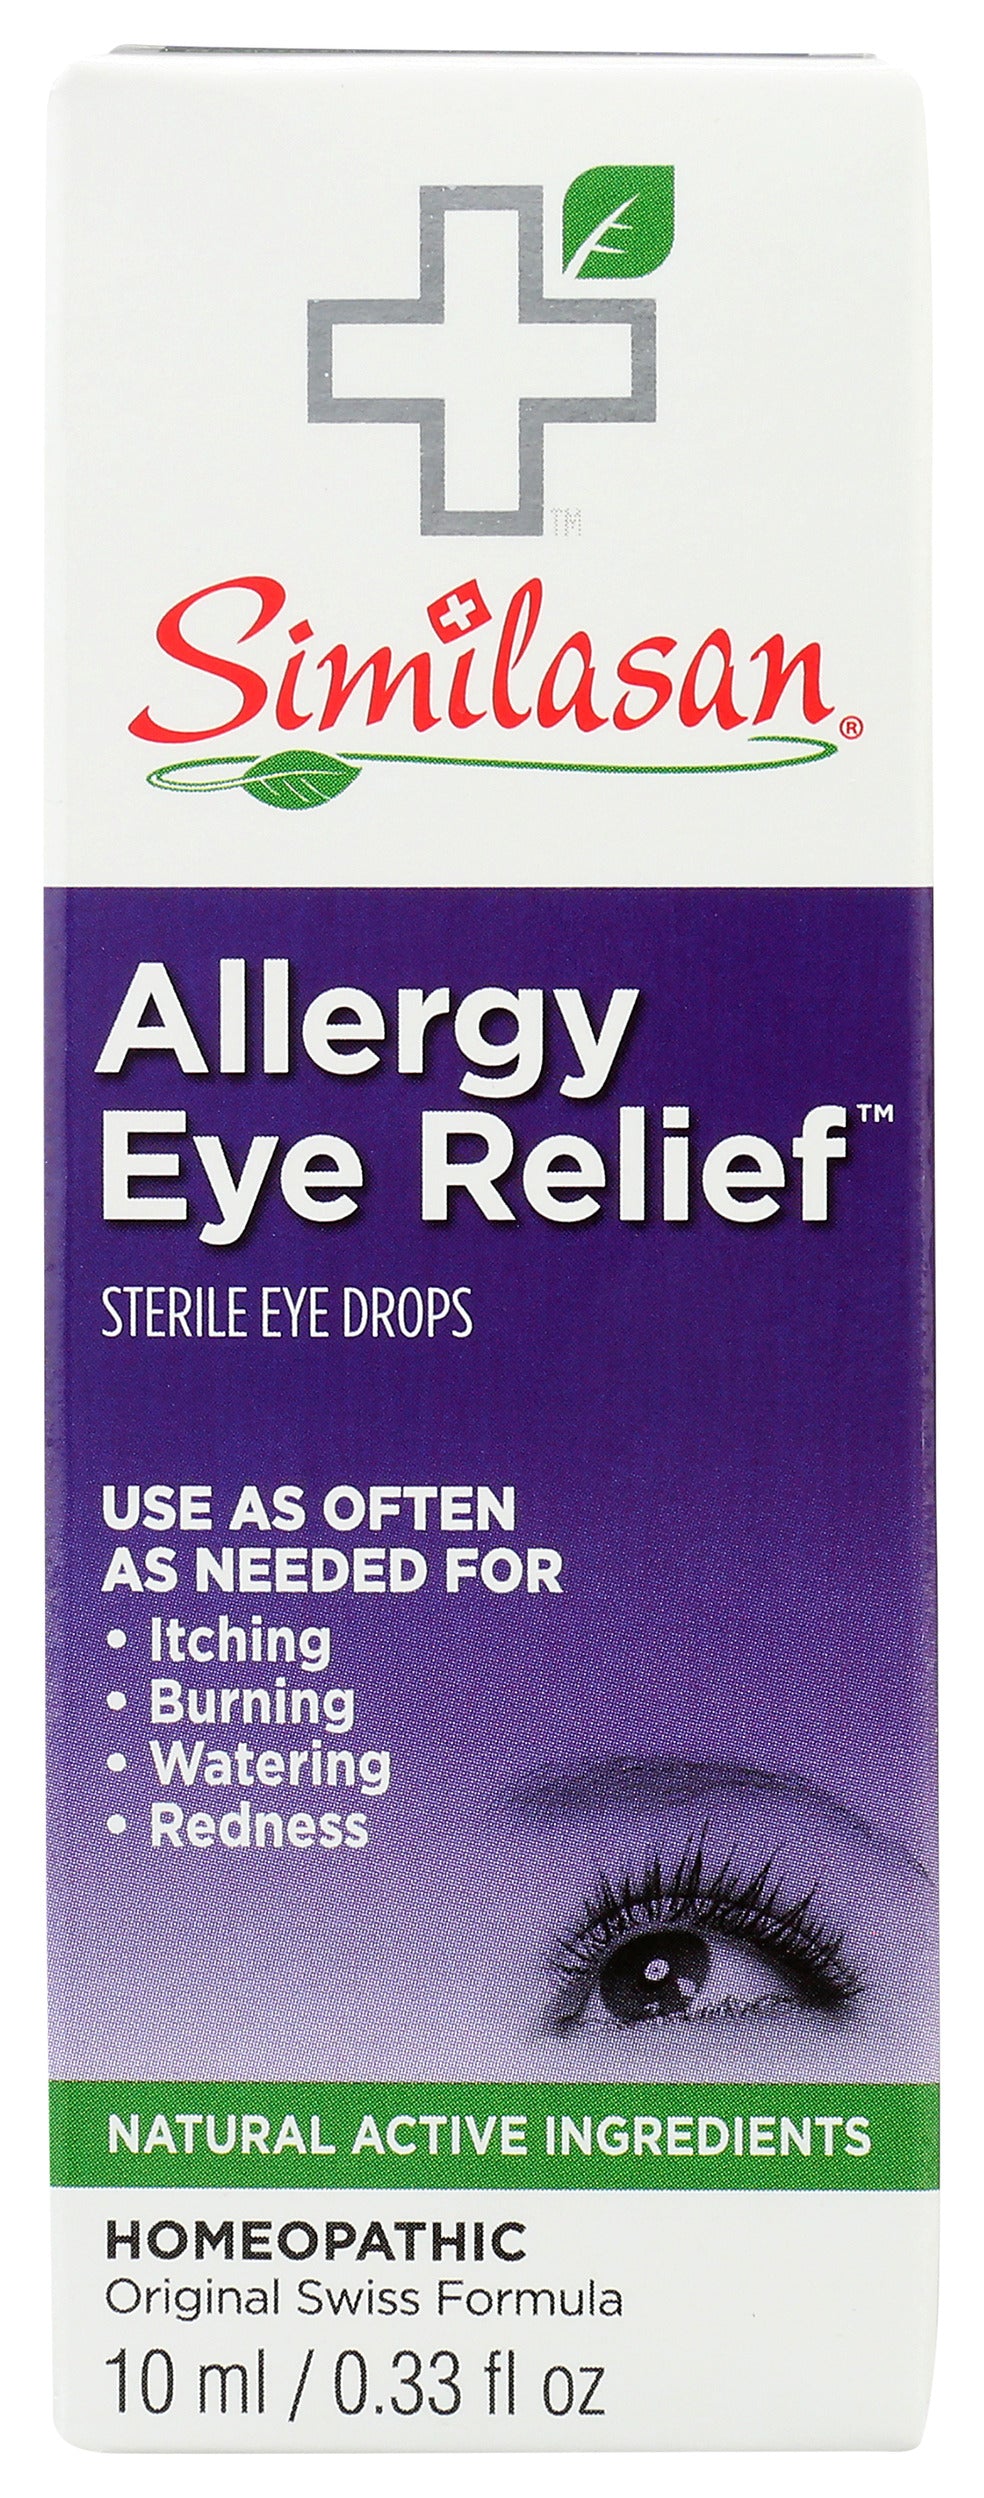 Similasan Allergy Eye Relief Drops 0.33 fl oz Front